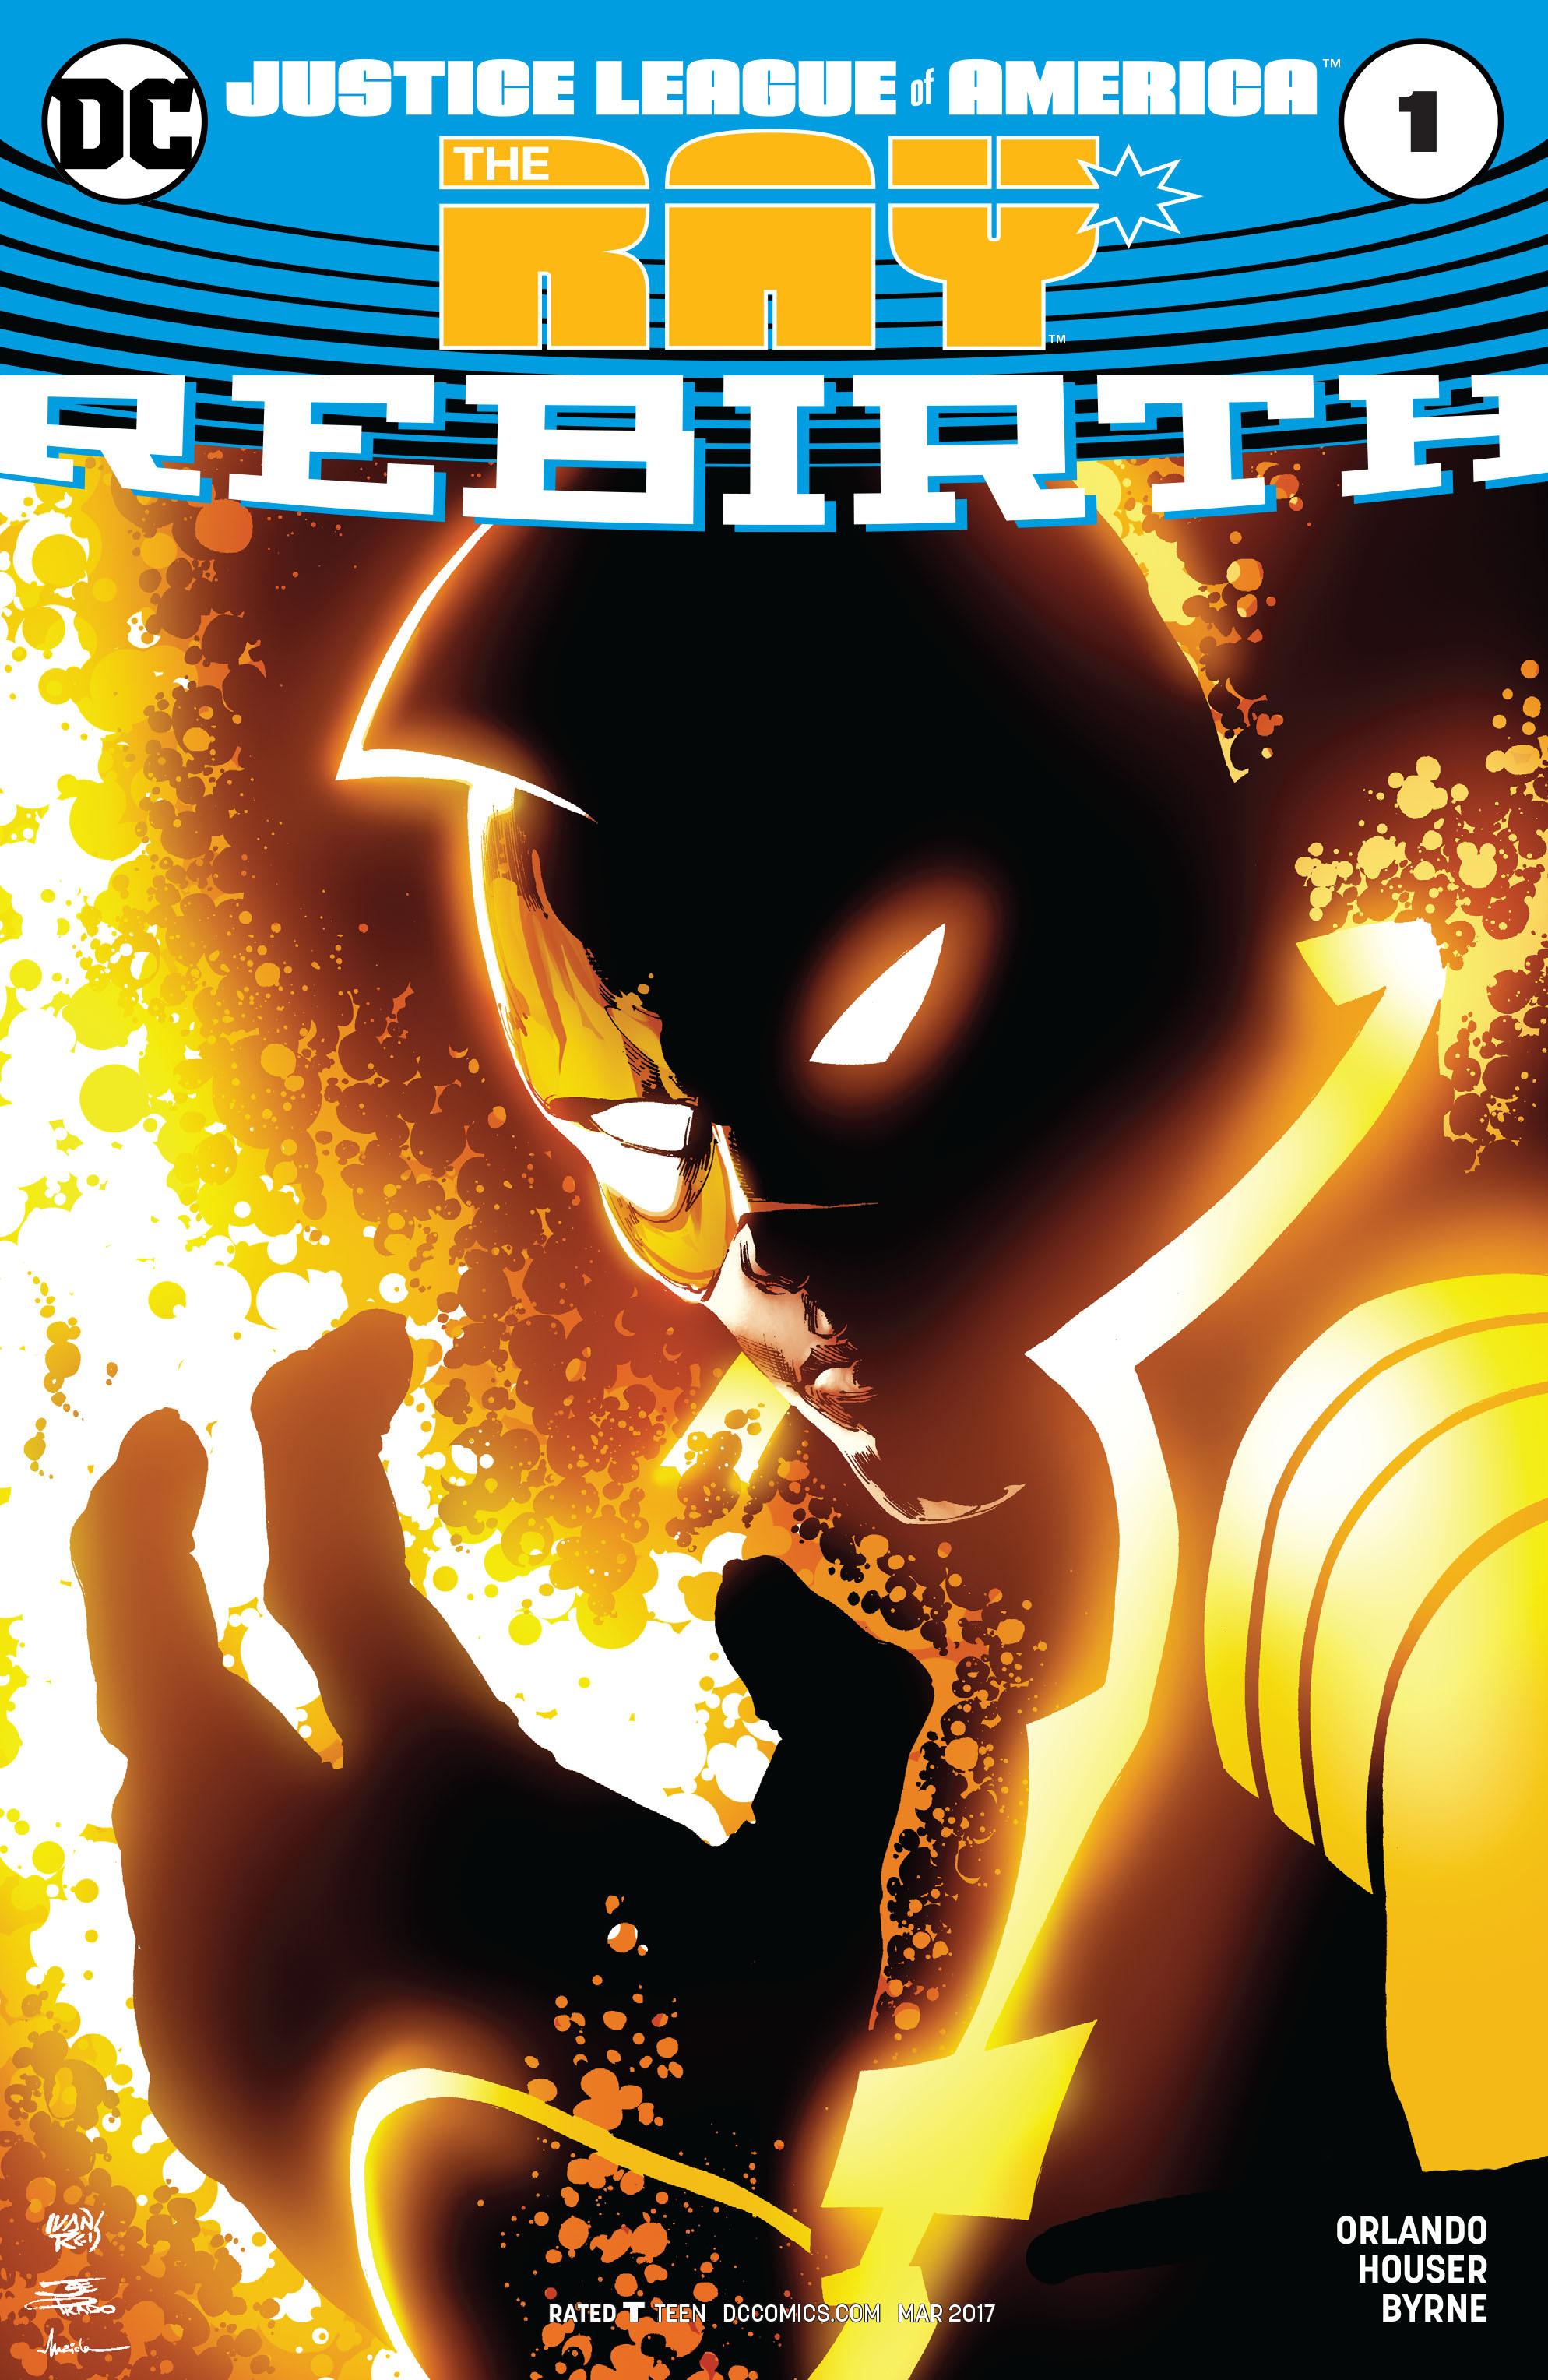 Justice League of America: The Ray Rebirth Vol. 1 #1